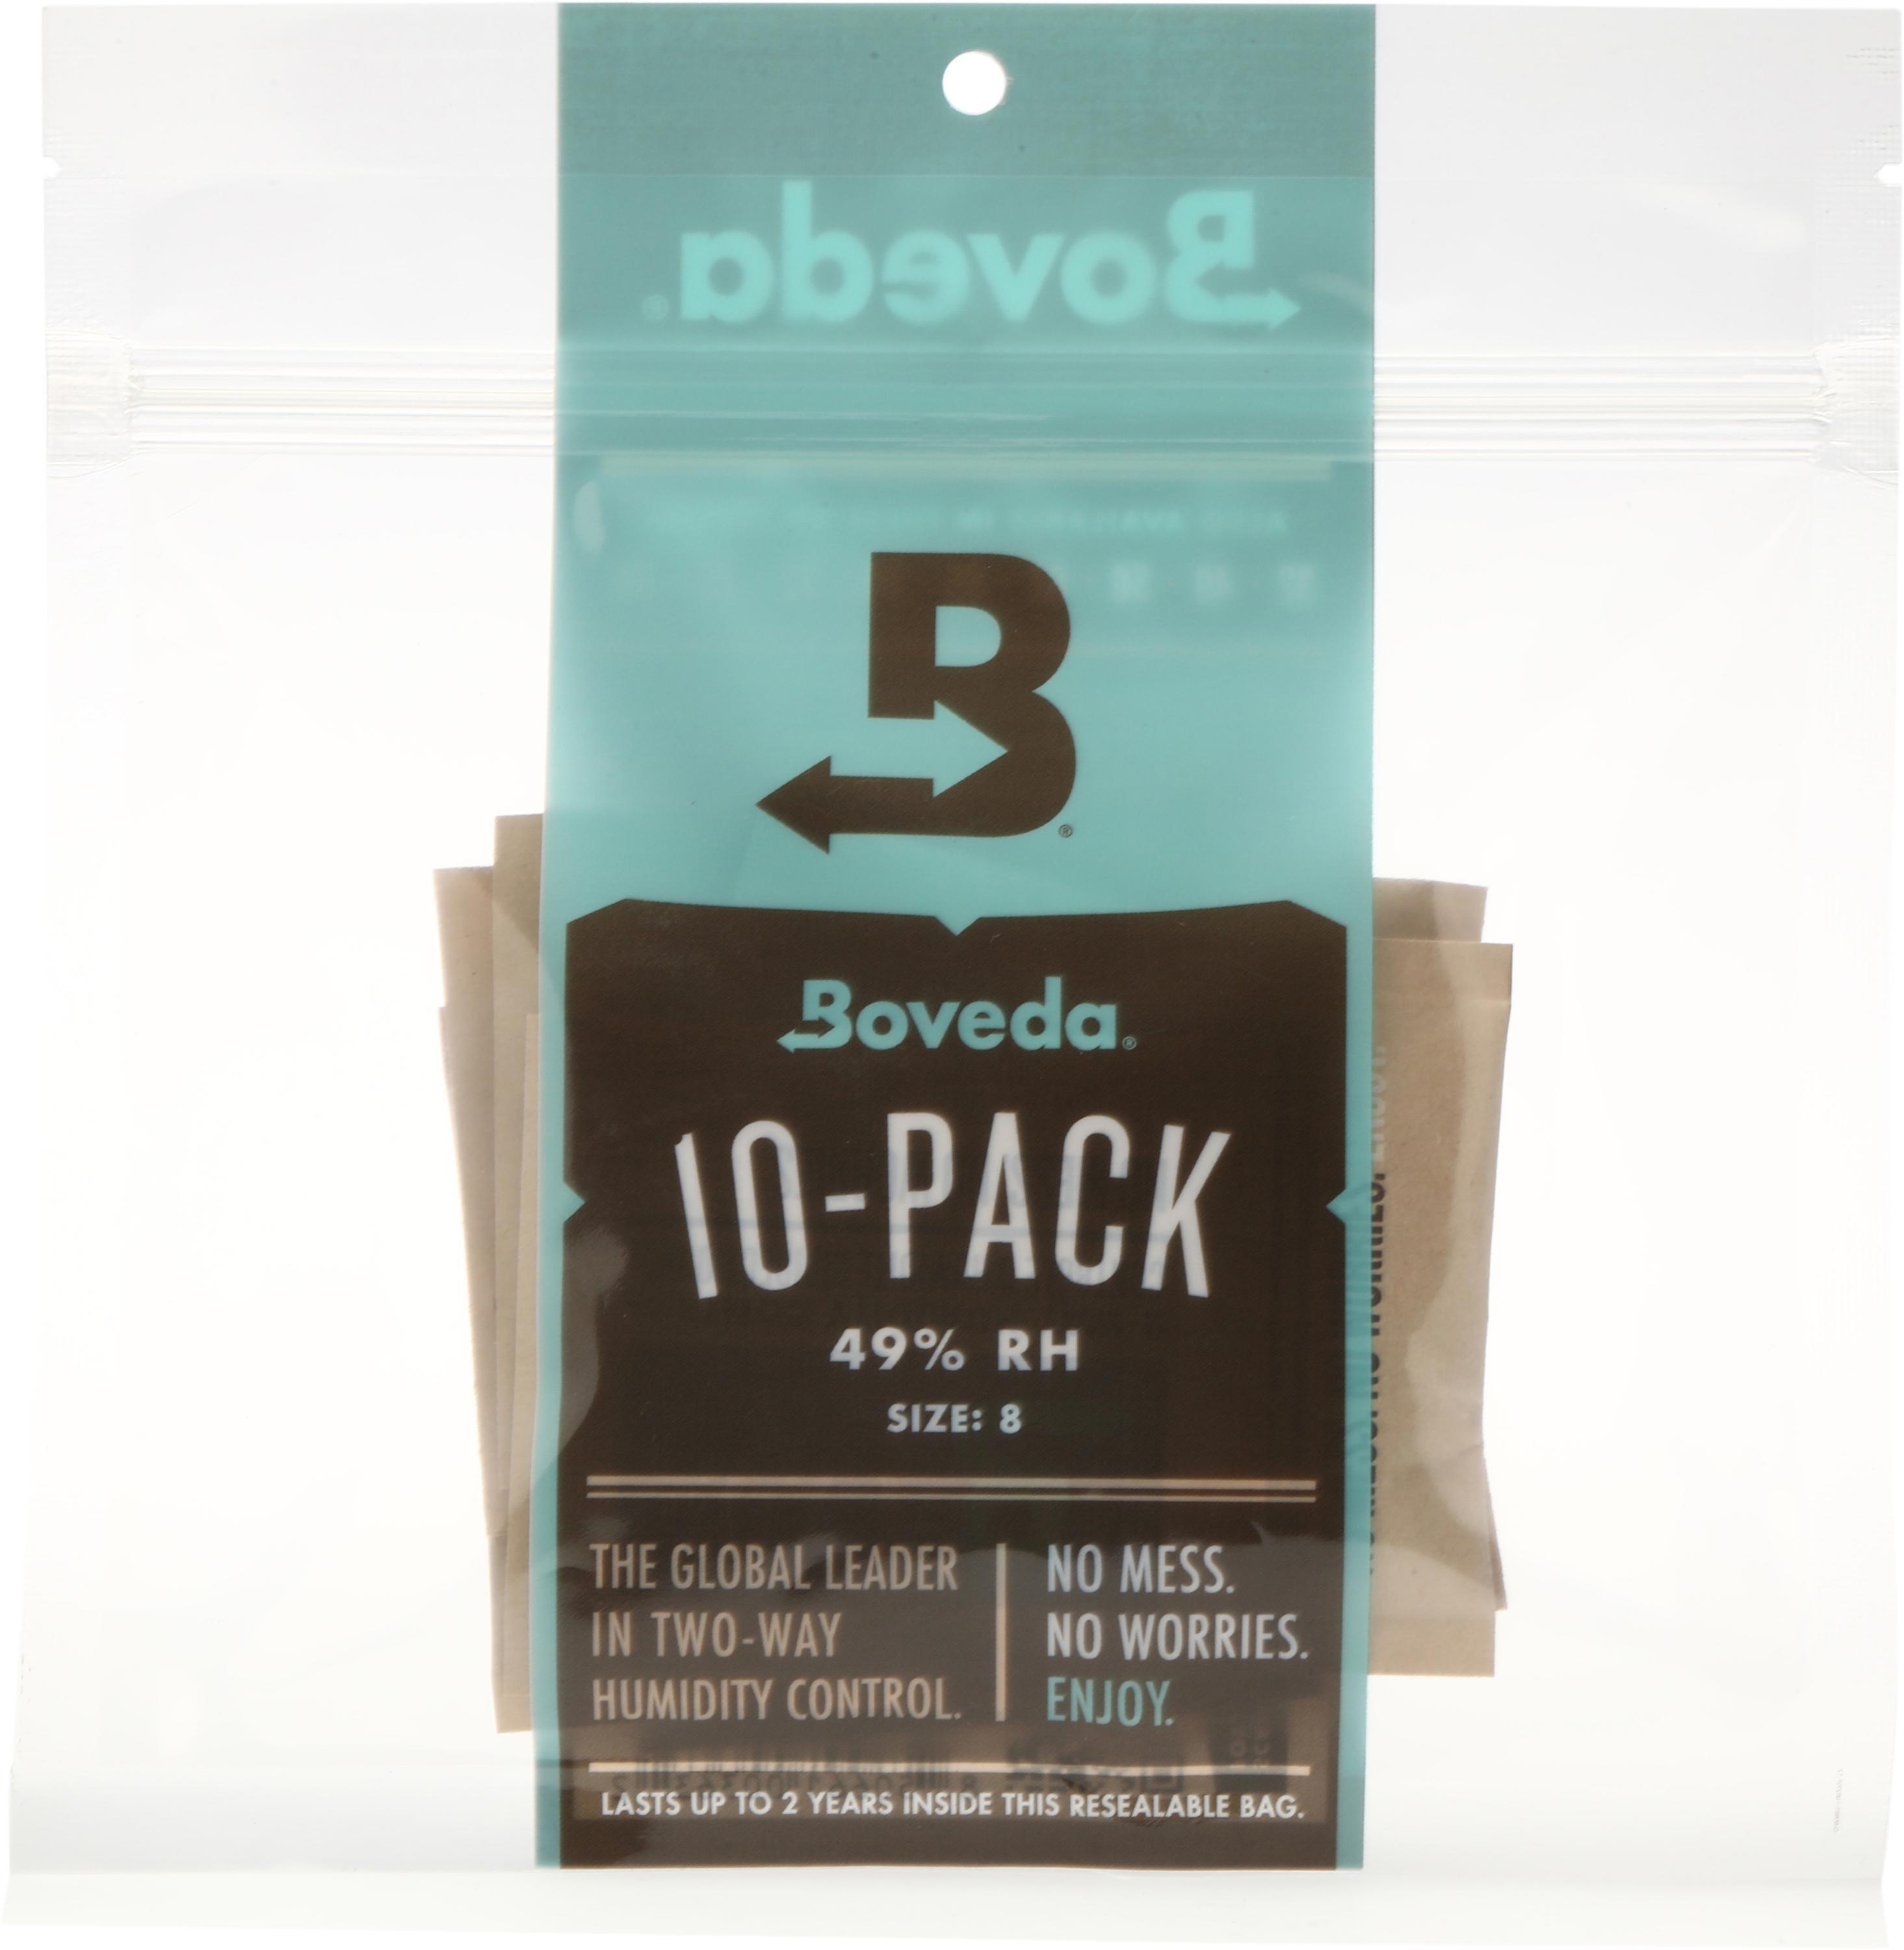 Boveda - Two way humidity control packs